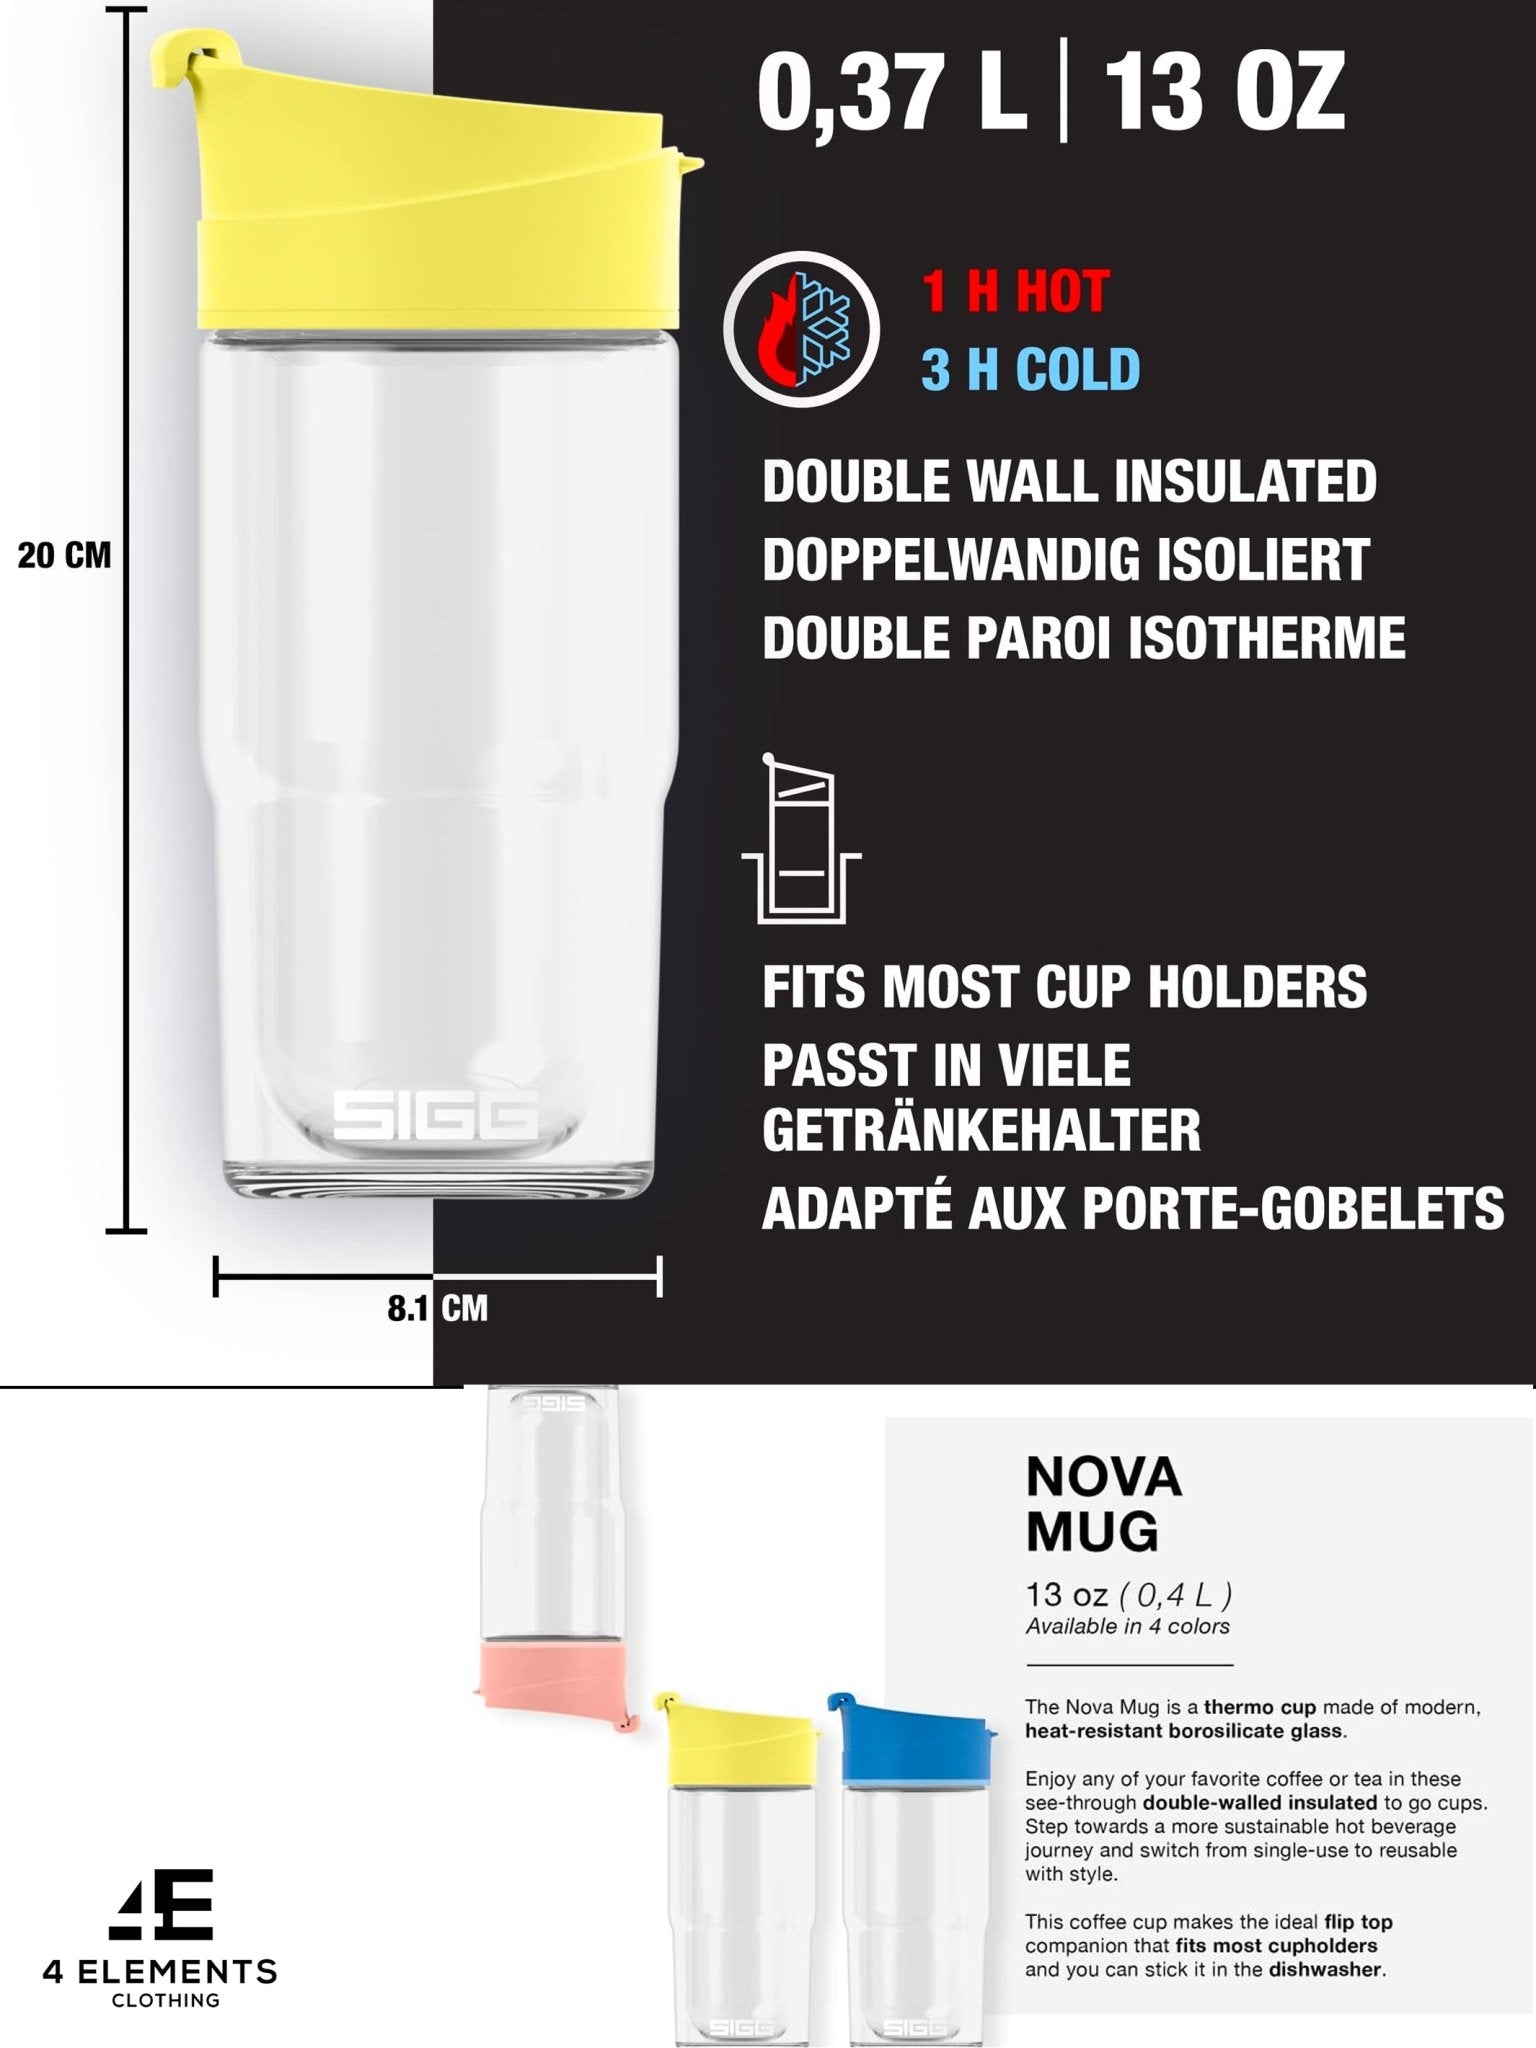 4elementsclothingSiggSIGG - Travel Mug Nova Ultra Coffee Thermo Cup 0.37 LWater Bottles8834.10